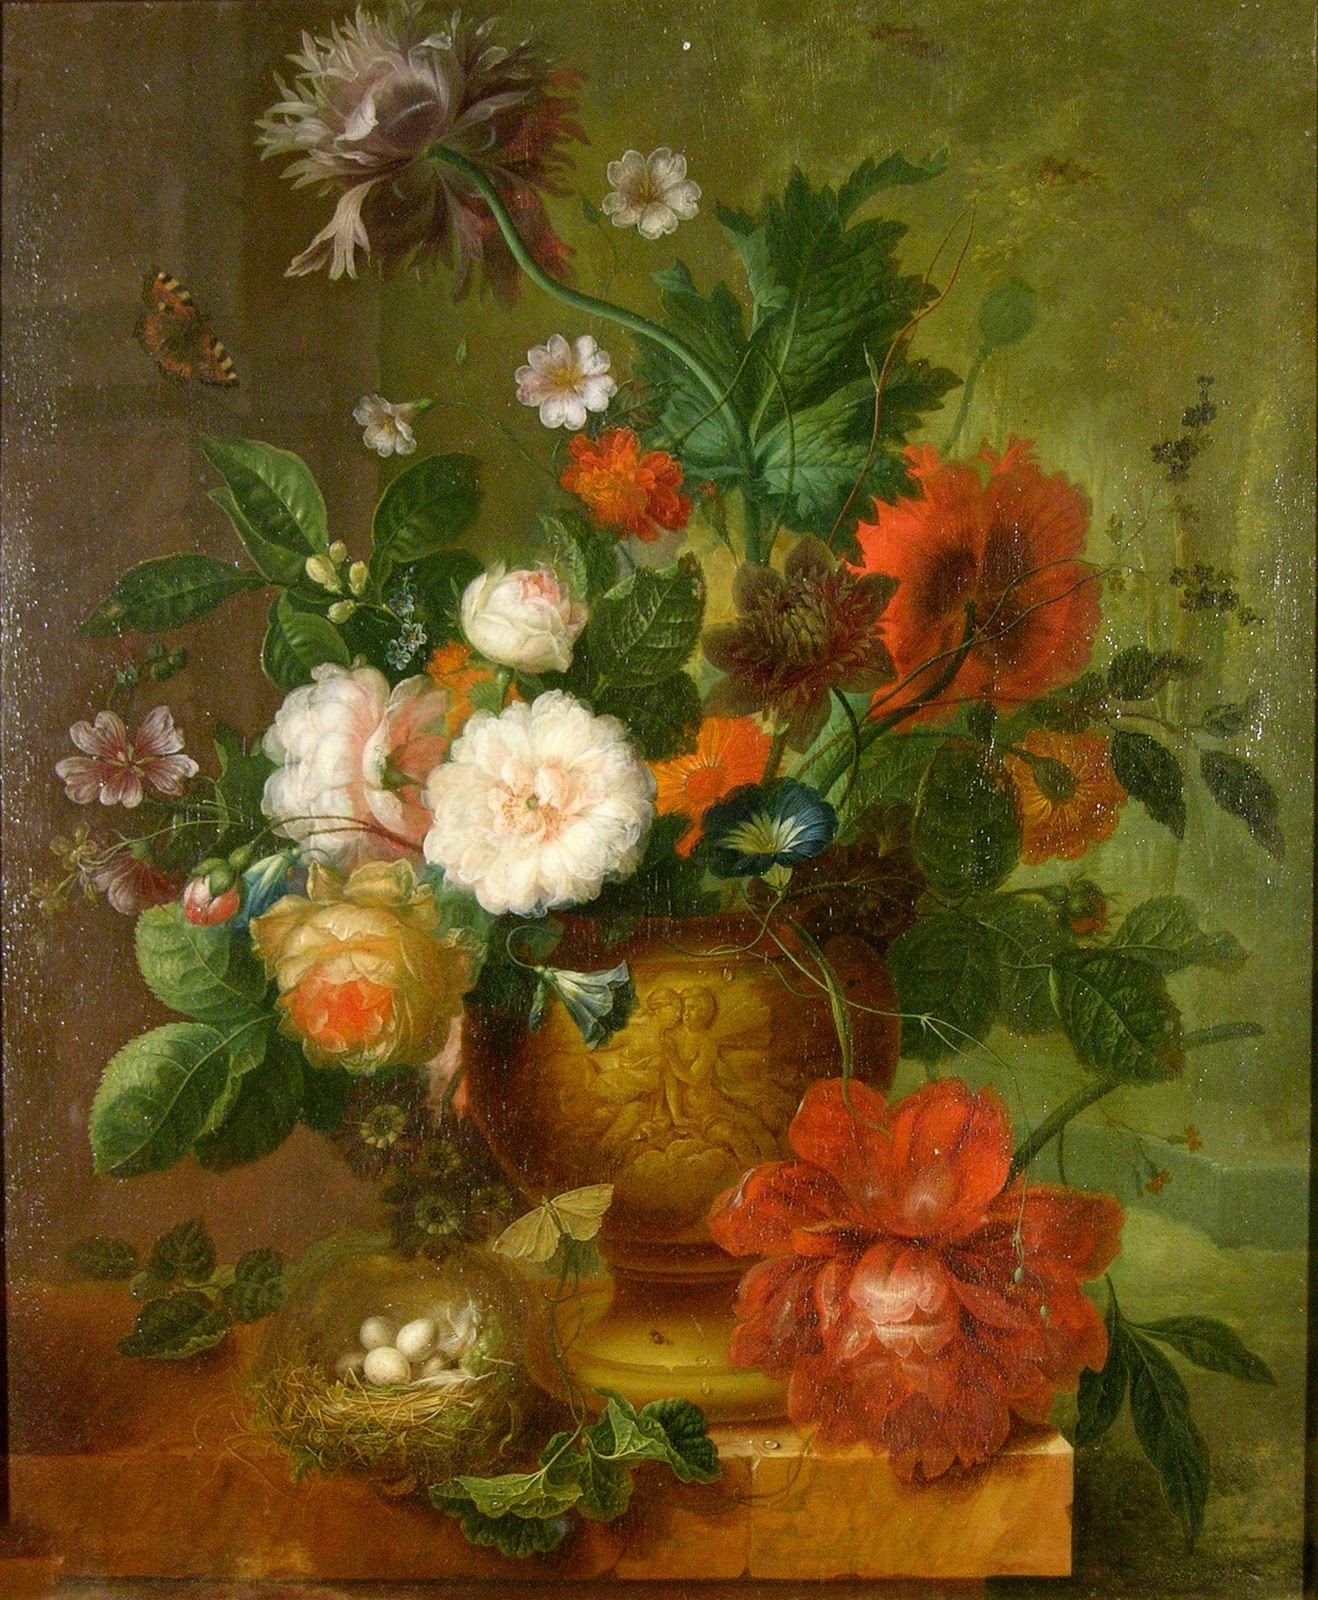 Jan+Van+Huysum-1682-1749 (14).jpg